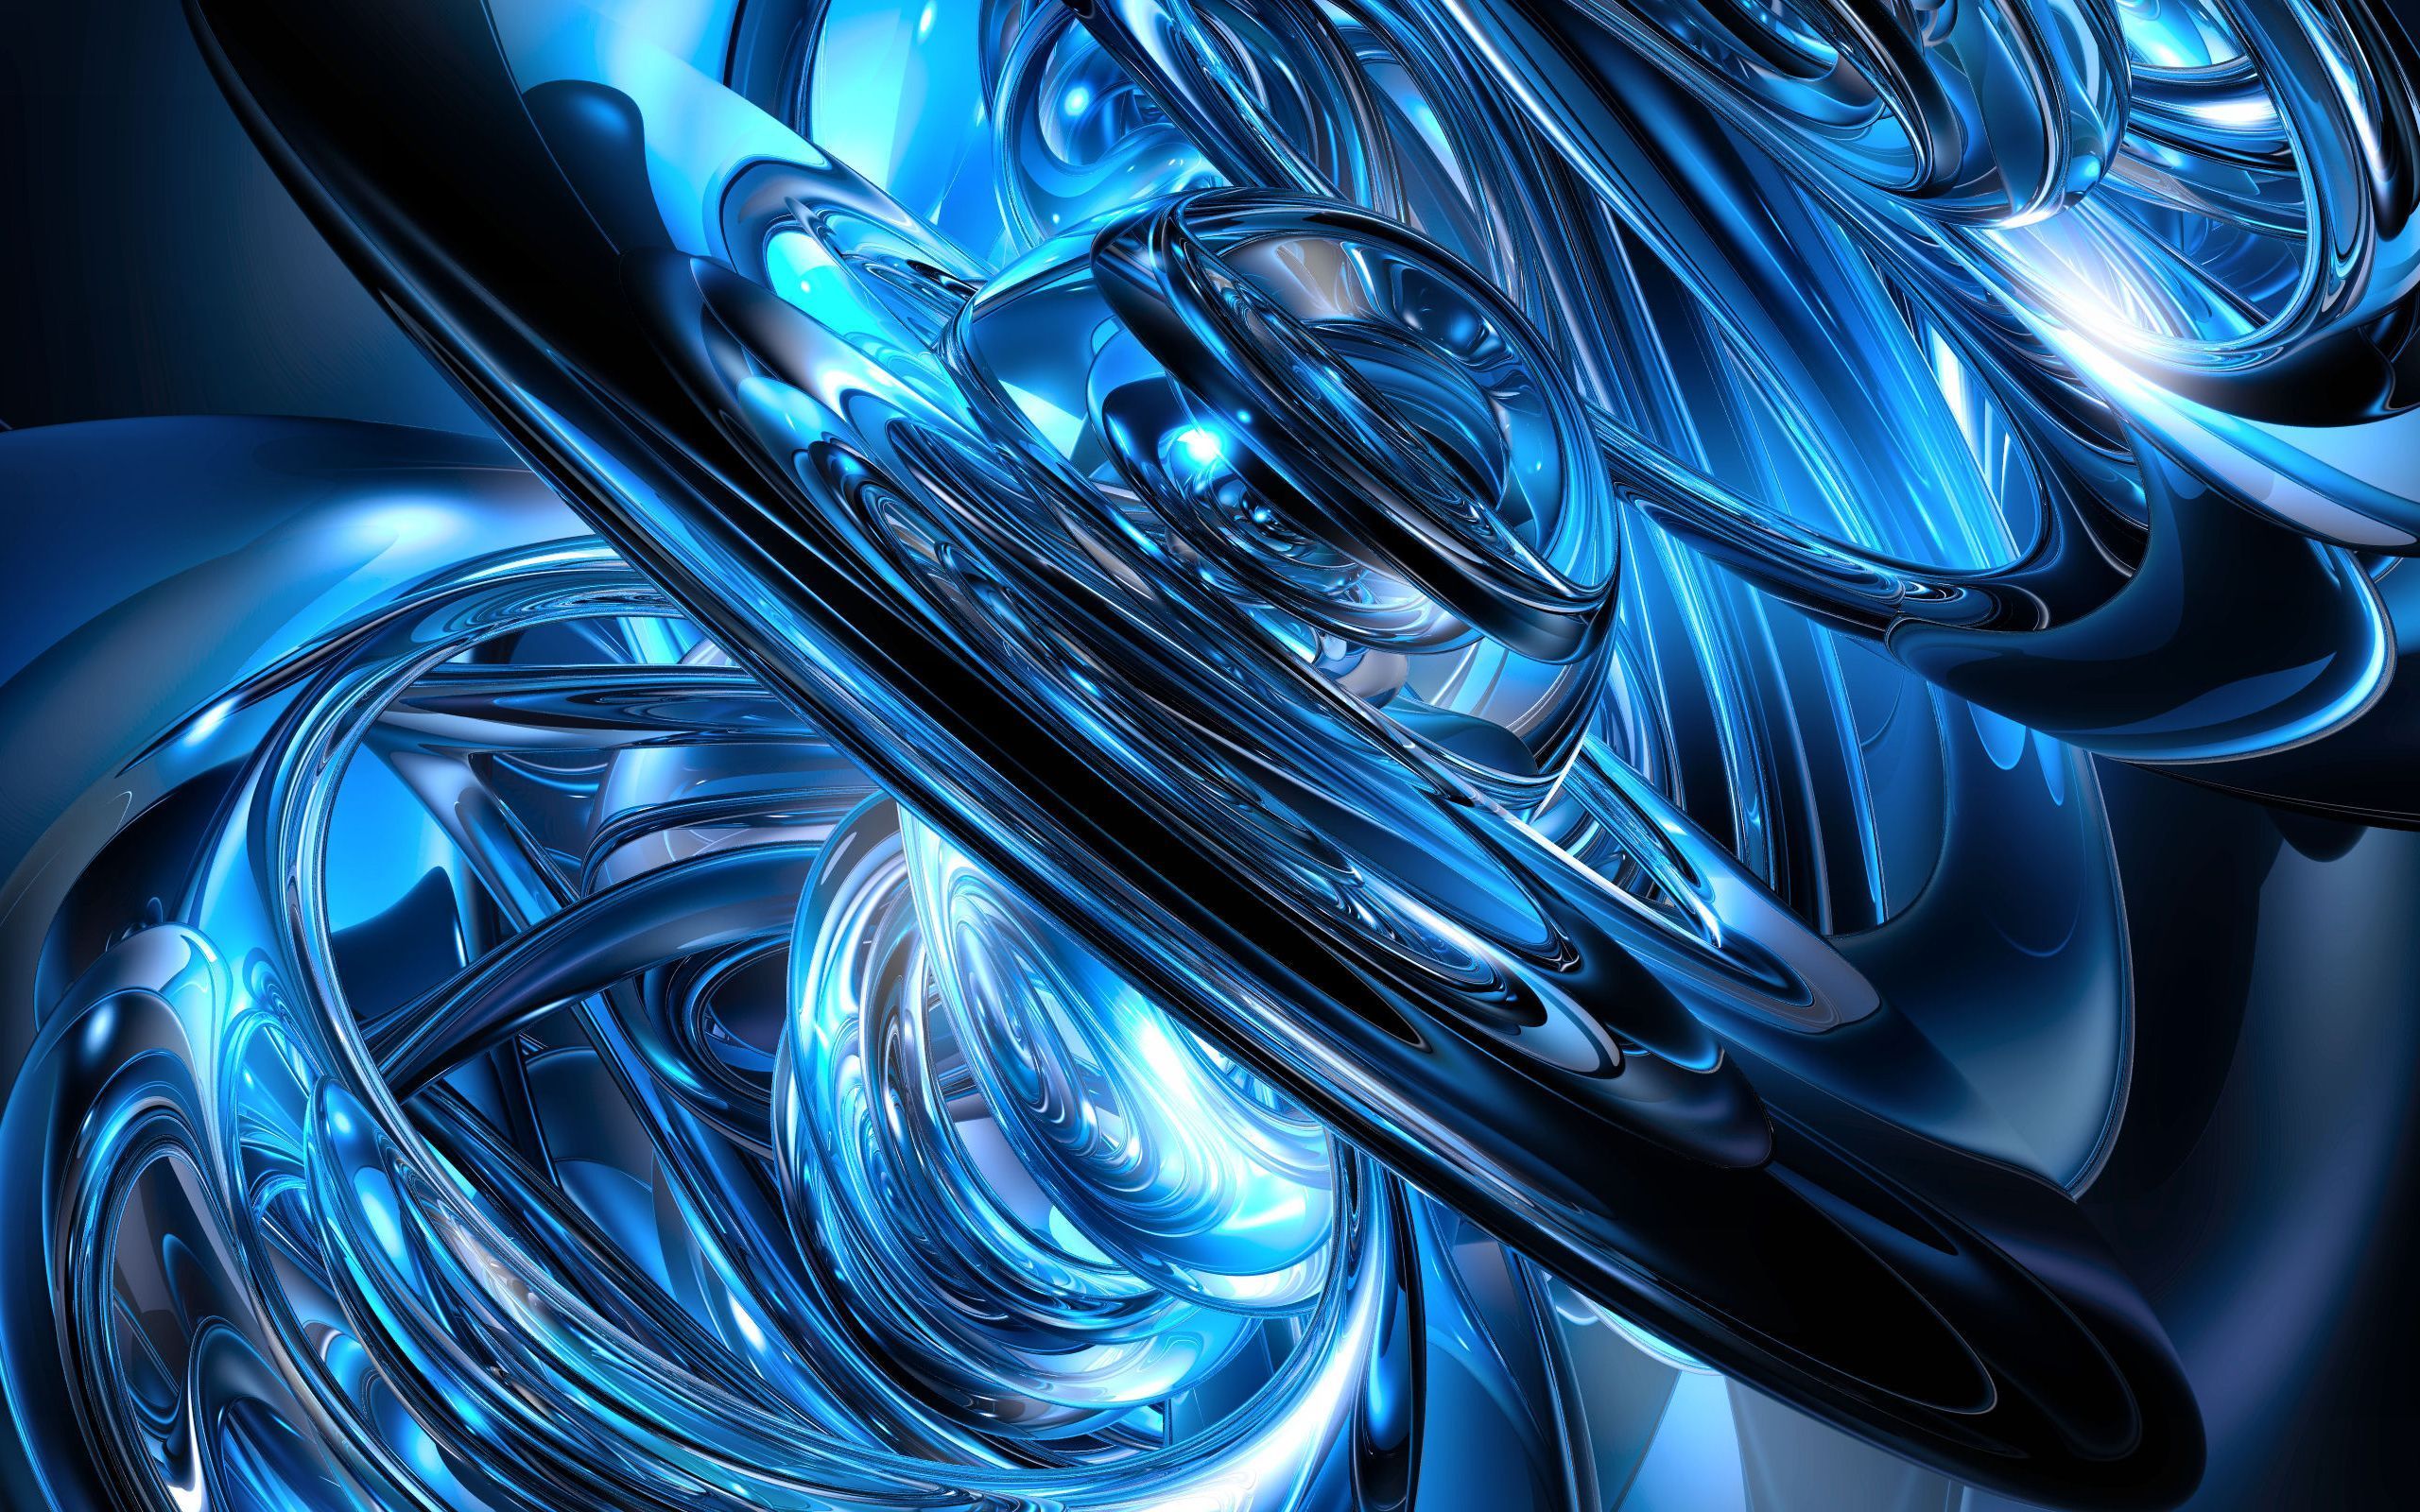 3 Light Blue HD Wallpapers | Backgrounds - Wallpaper Abyss